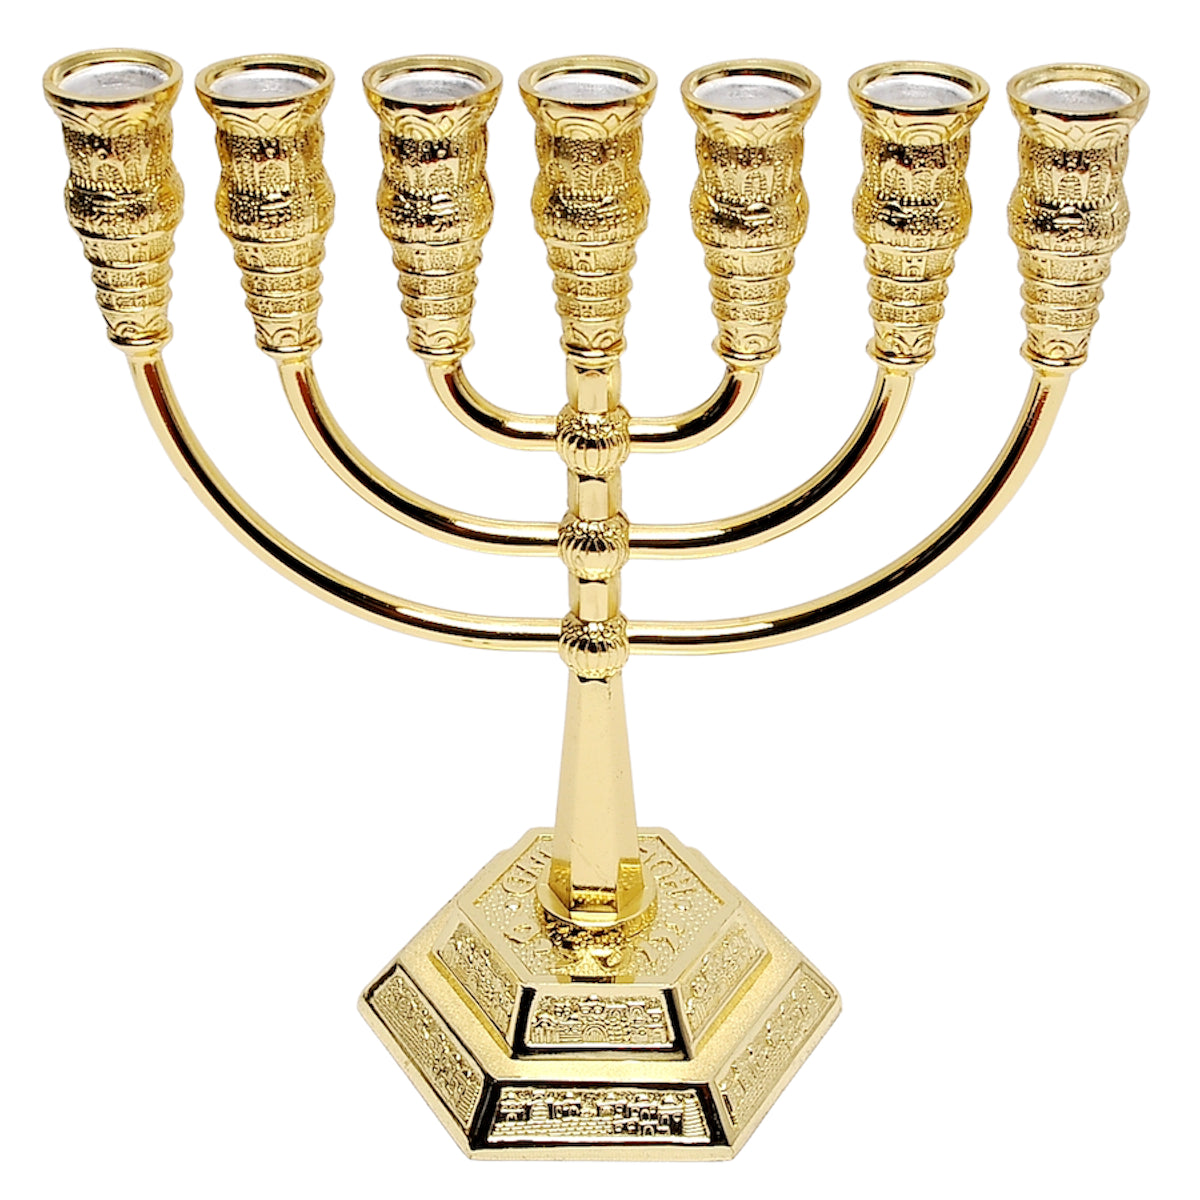 Menorah Gold Plated Candle Holder size 8.6″ / 22 cm from Jerusalem Israel